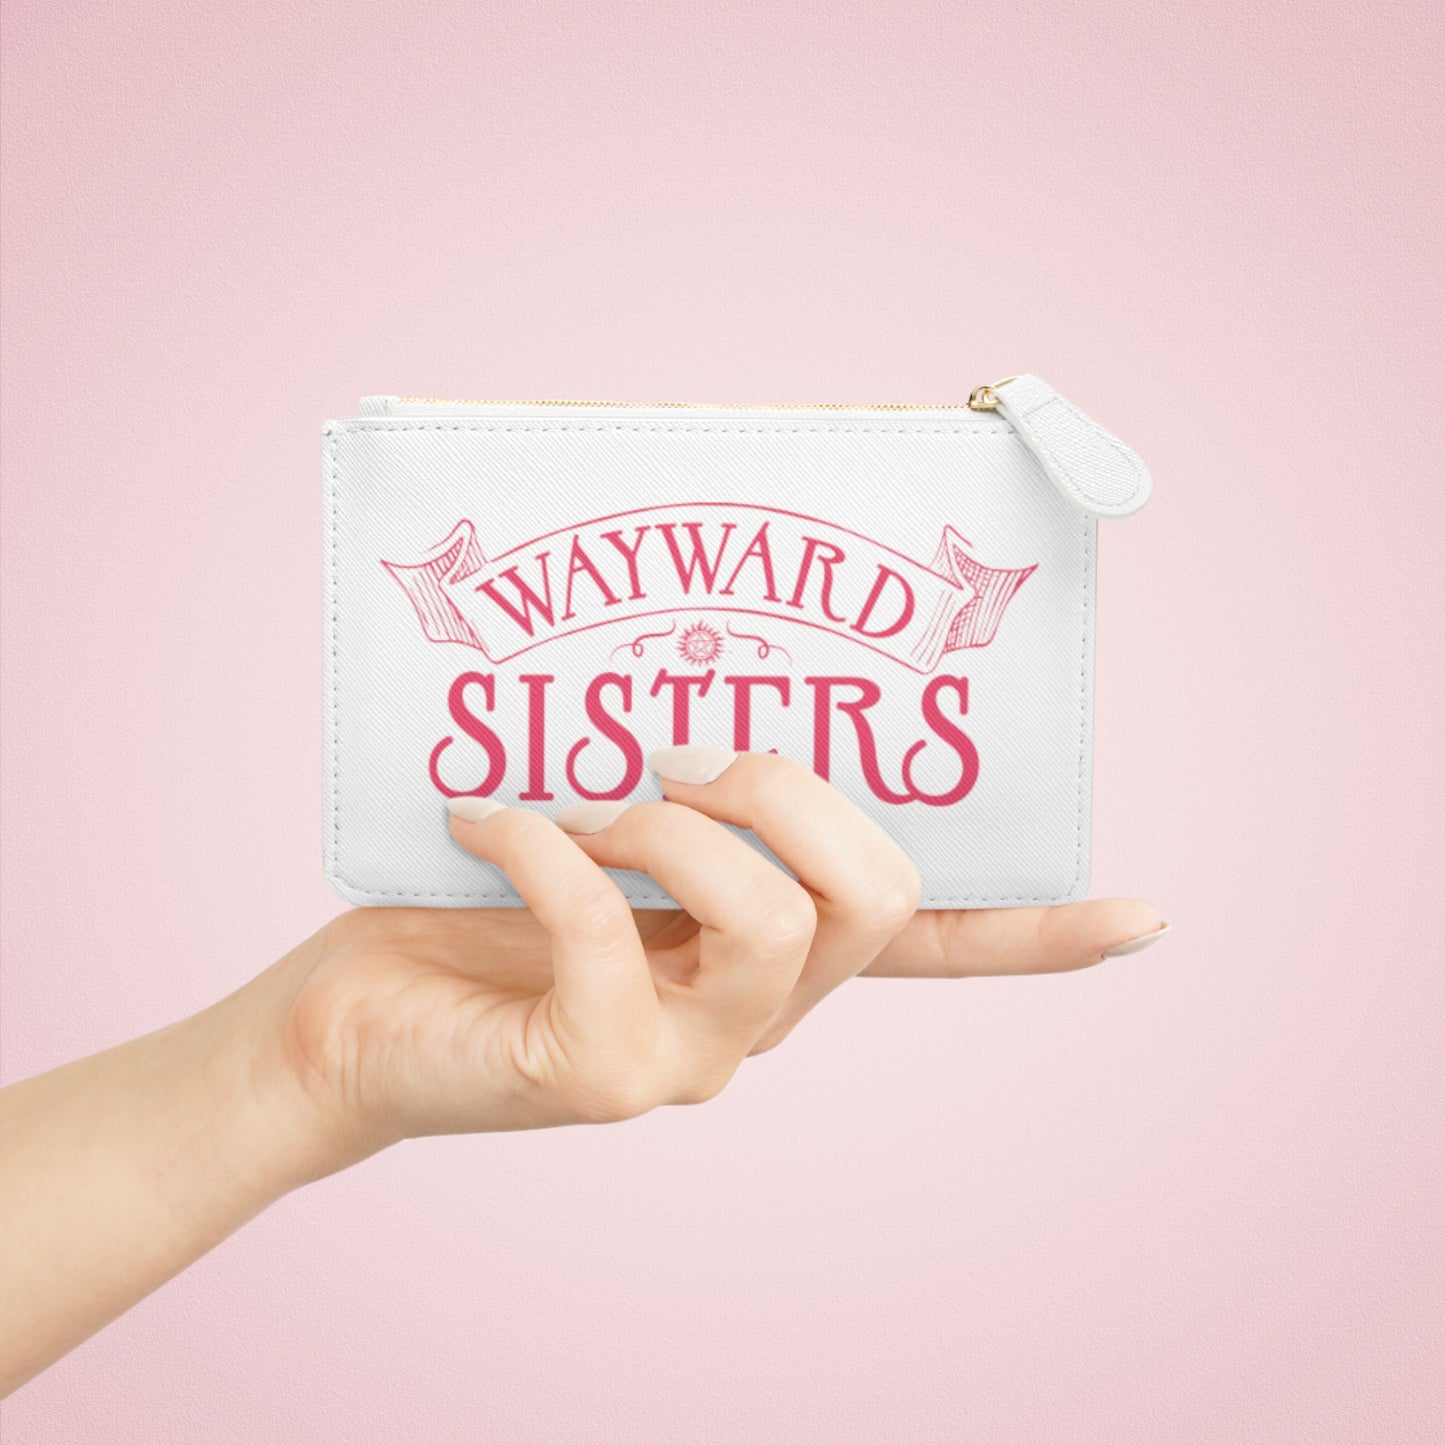 Wayward Sisters Mini Clutch Bag